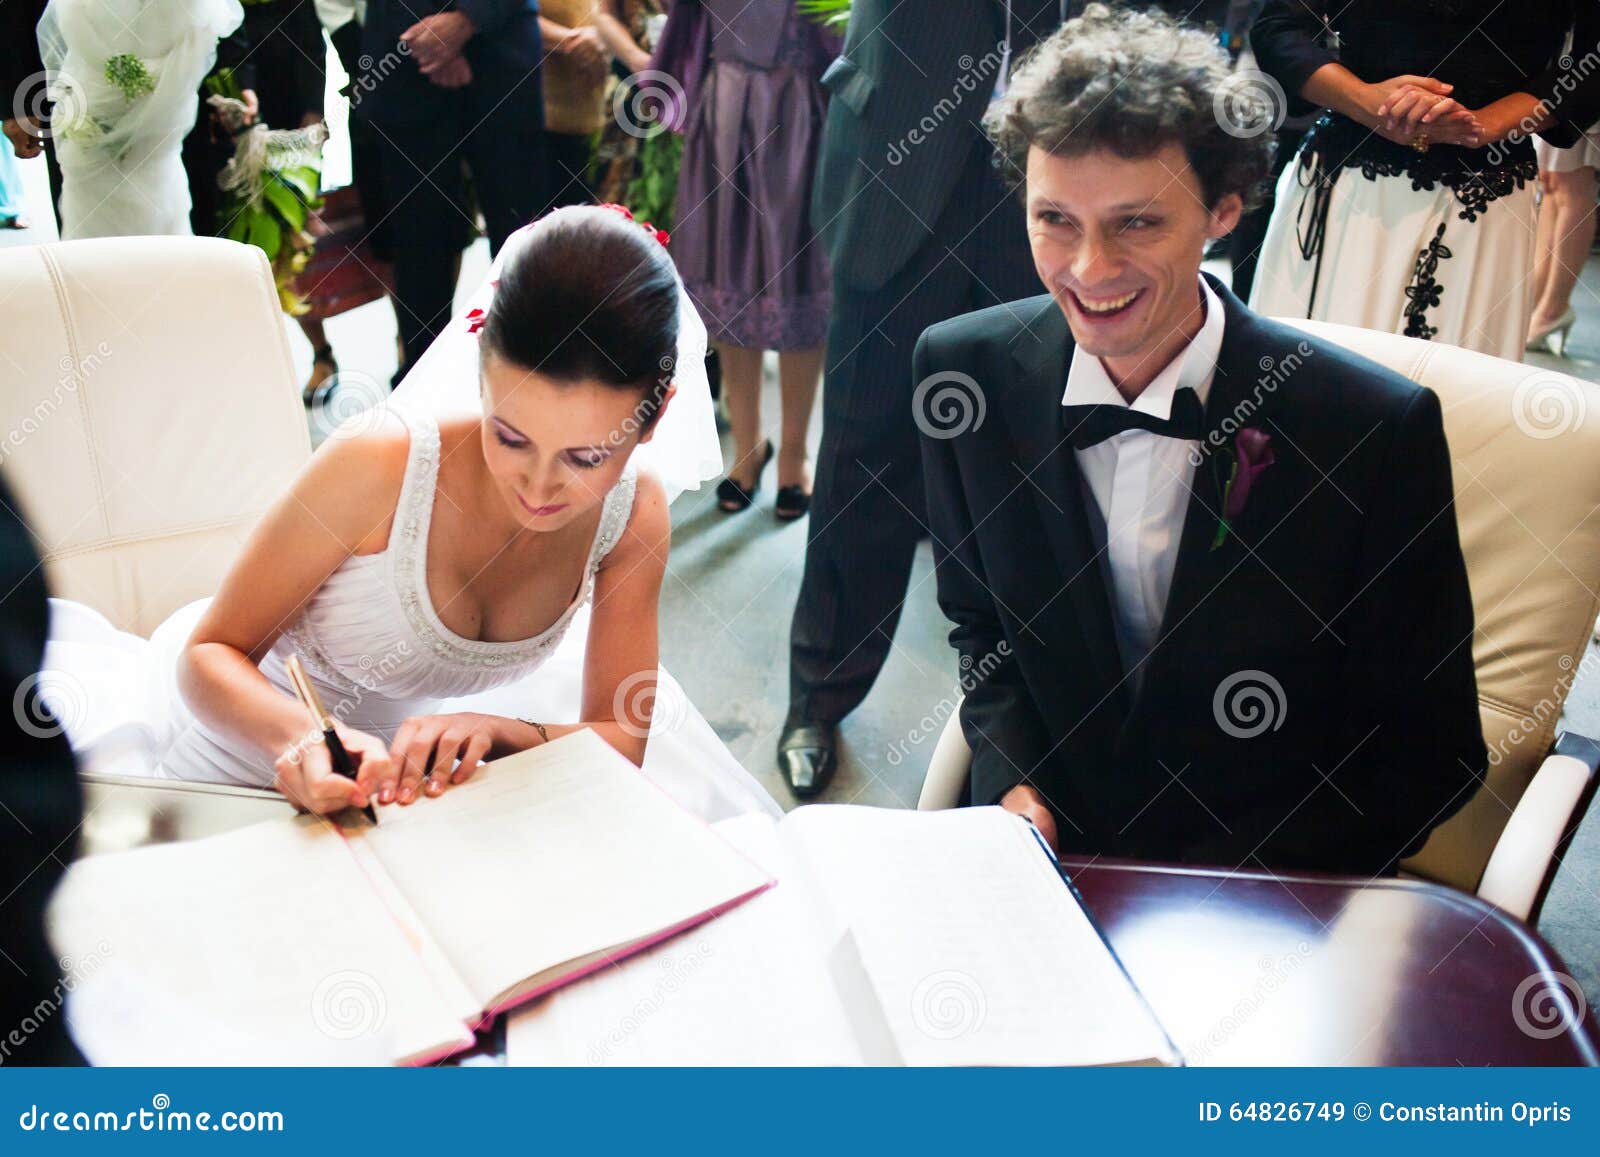 bride and groom signing registry